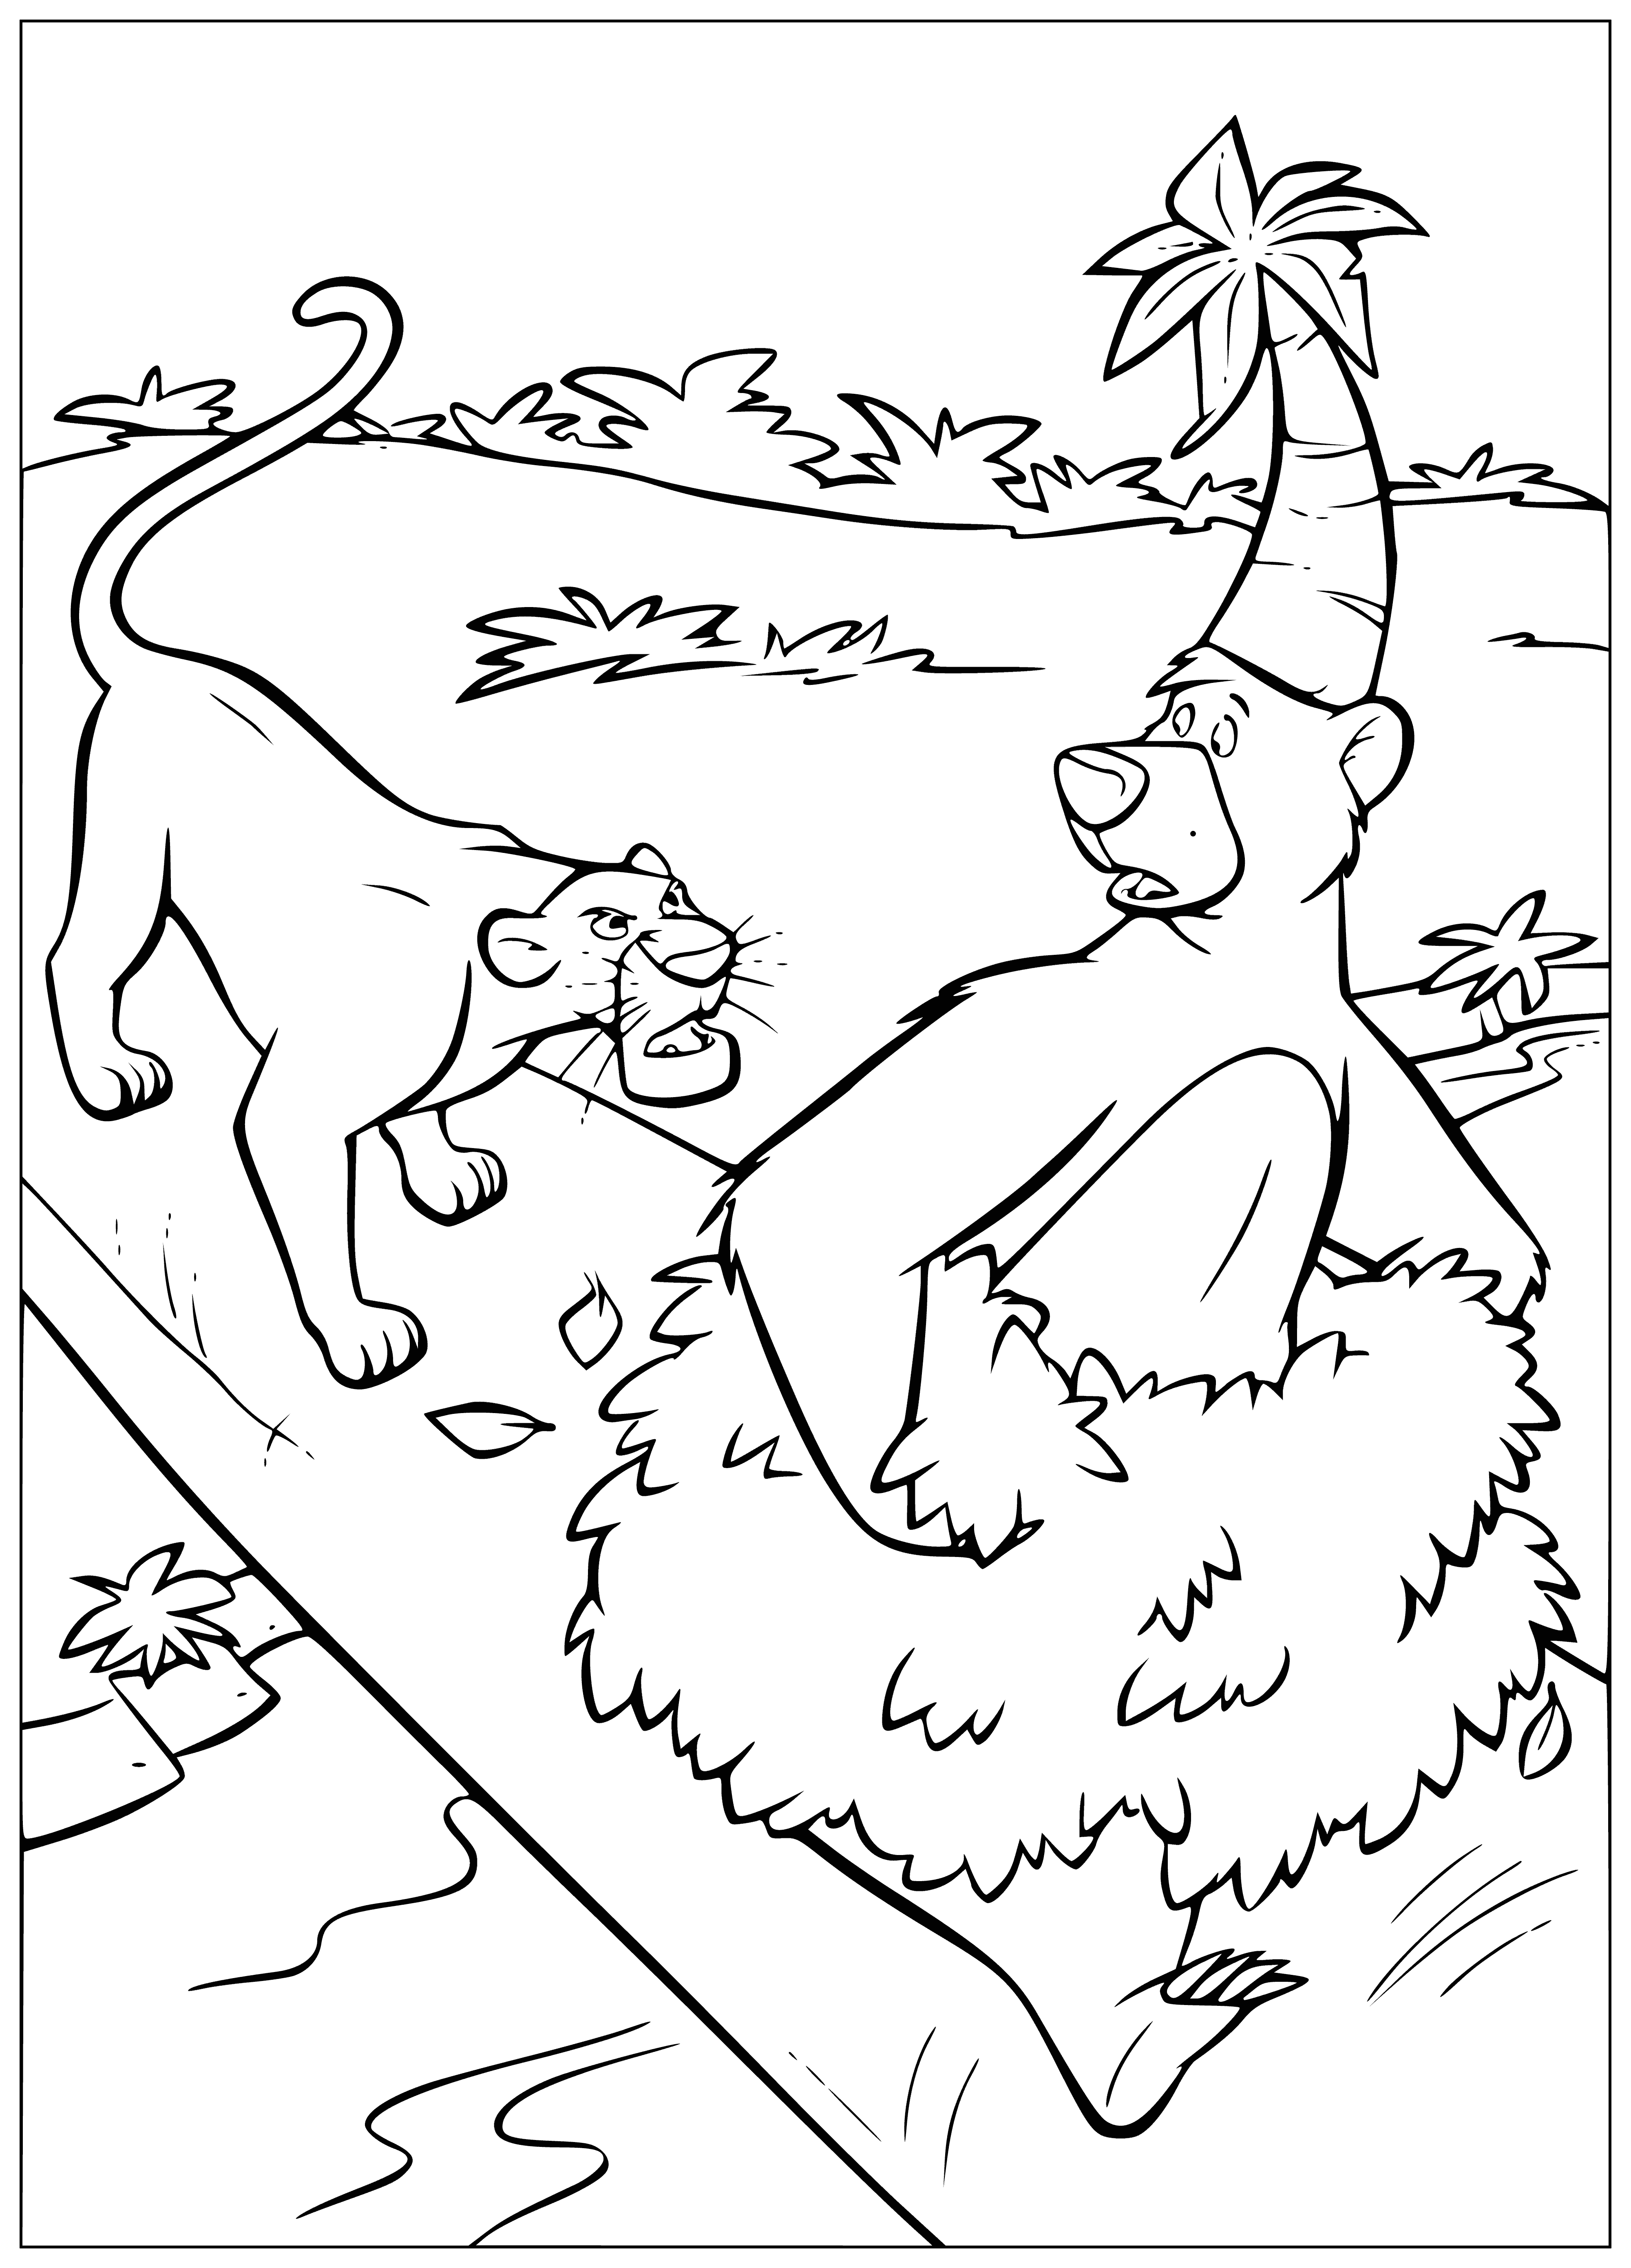 Mowgli in a hammock coloring page